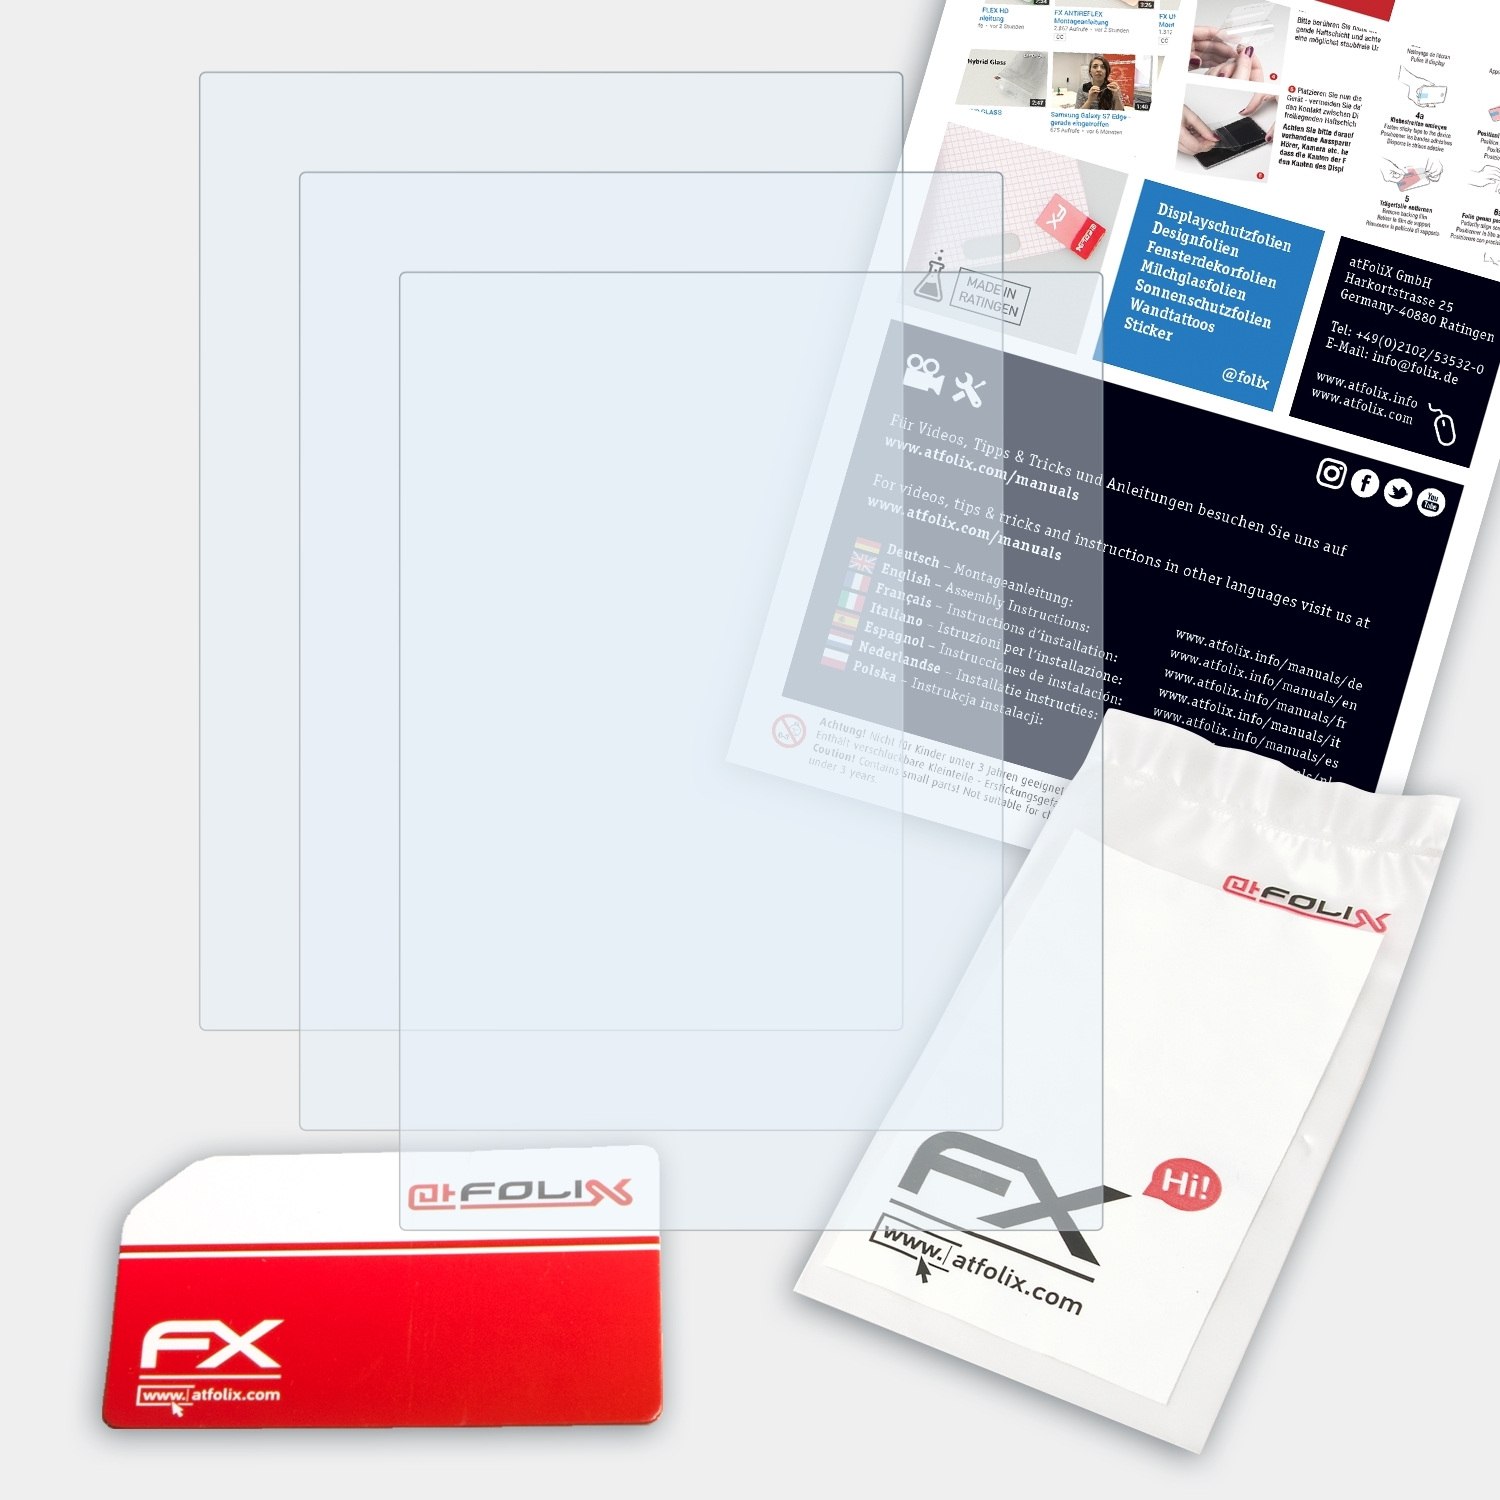 FX-Clear Displayschutz(für Kodak FZ55) PixPro 3x ATFOLIX